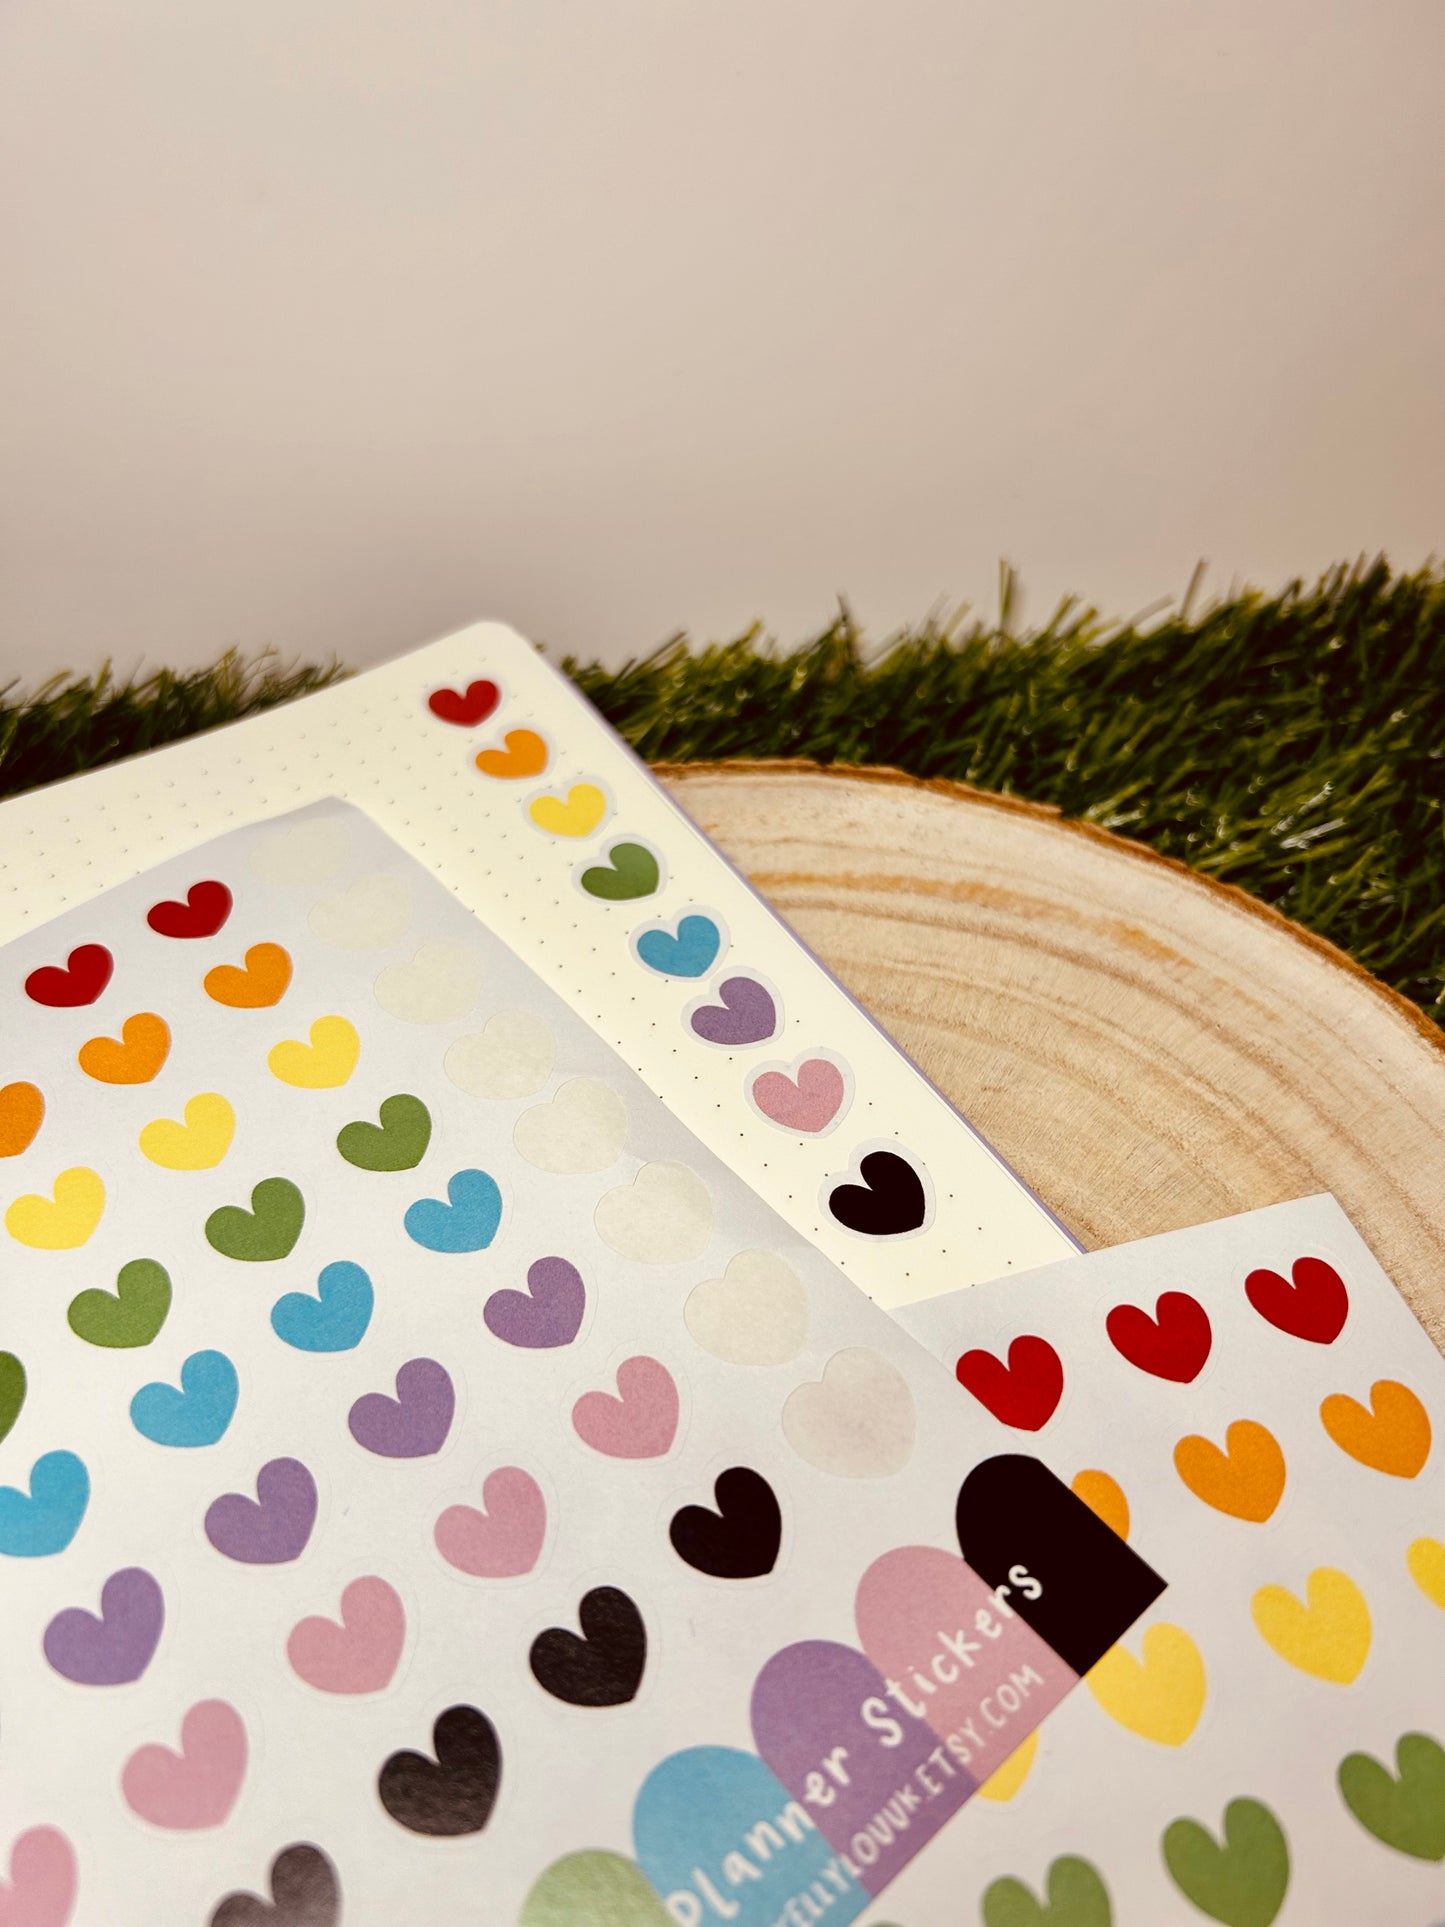 Rainbow Hearts Planner Sticker Sheet